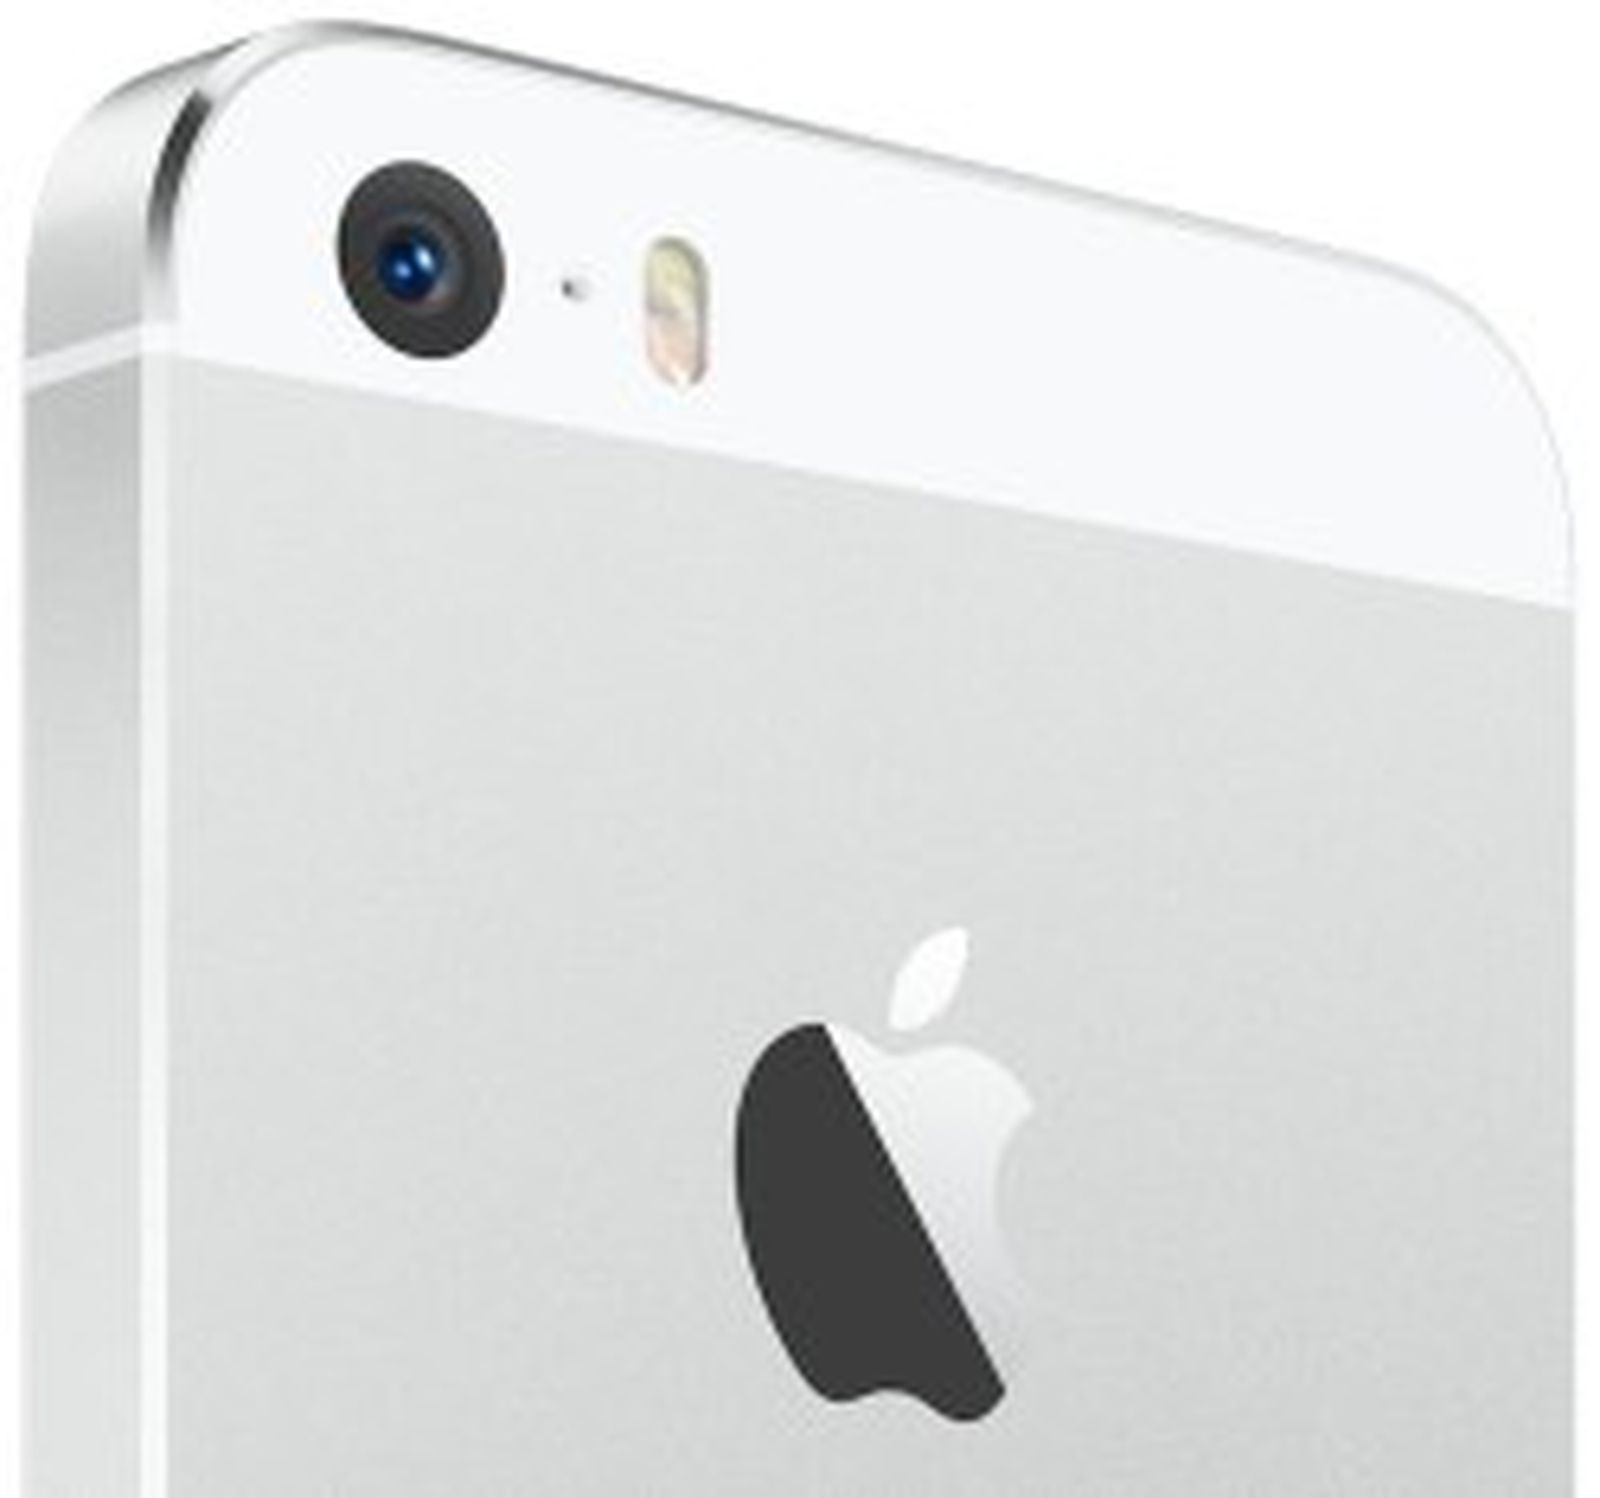 Лучший apple iphone. Apple iphone 5s 16gb Silver - серебристый. Iphone 5s белый. Смартфон Apple iphone 5. Айфон с 5 камерами.